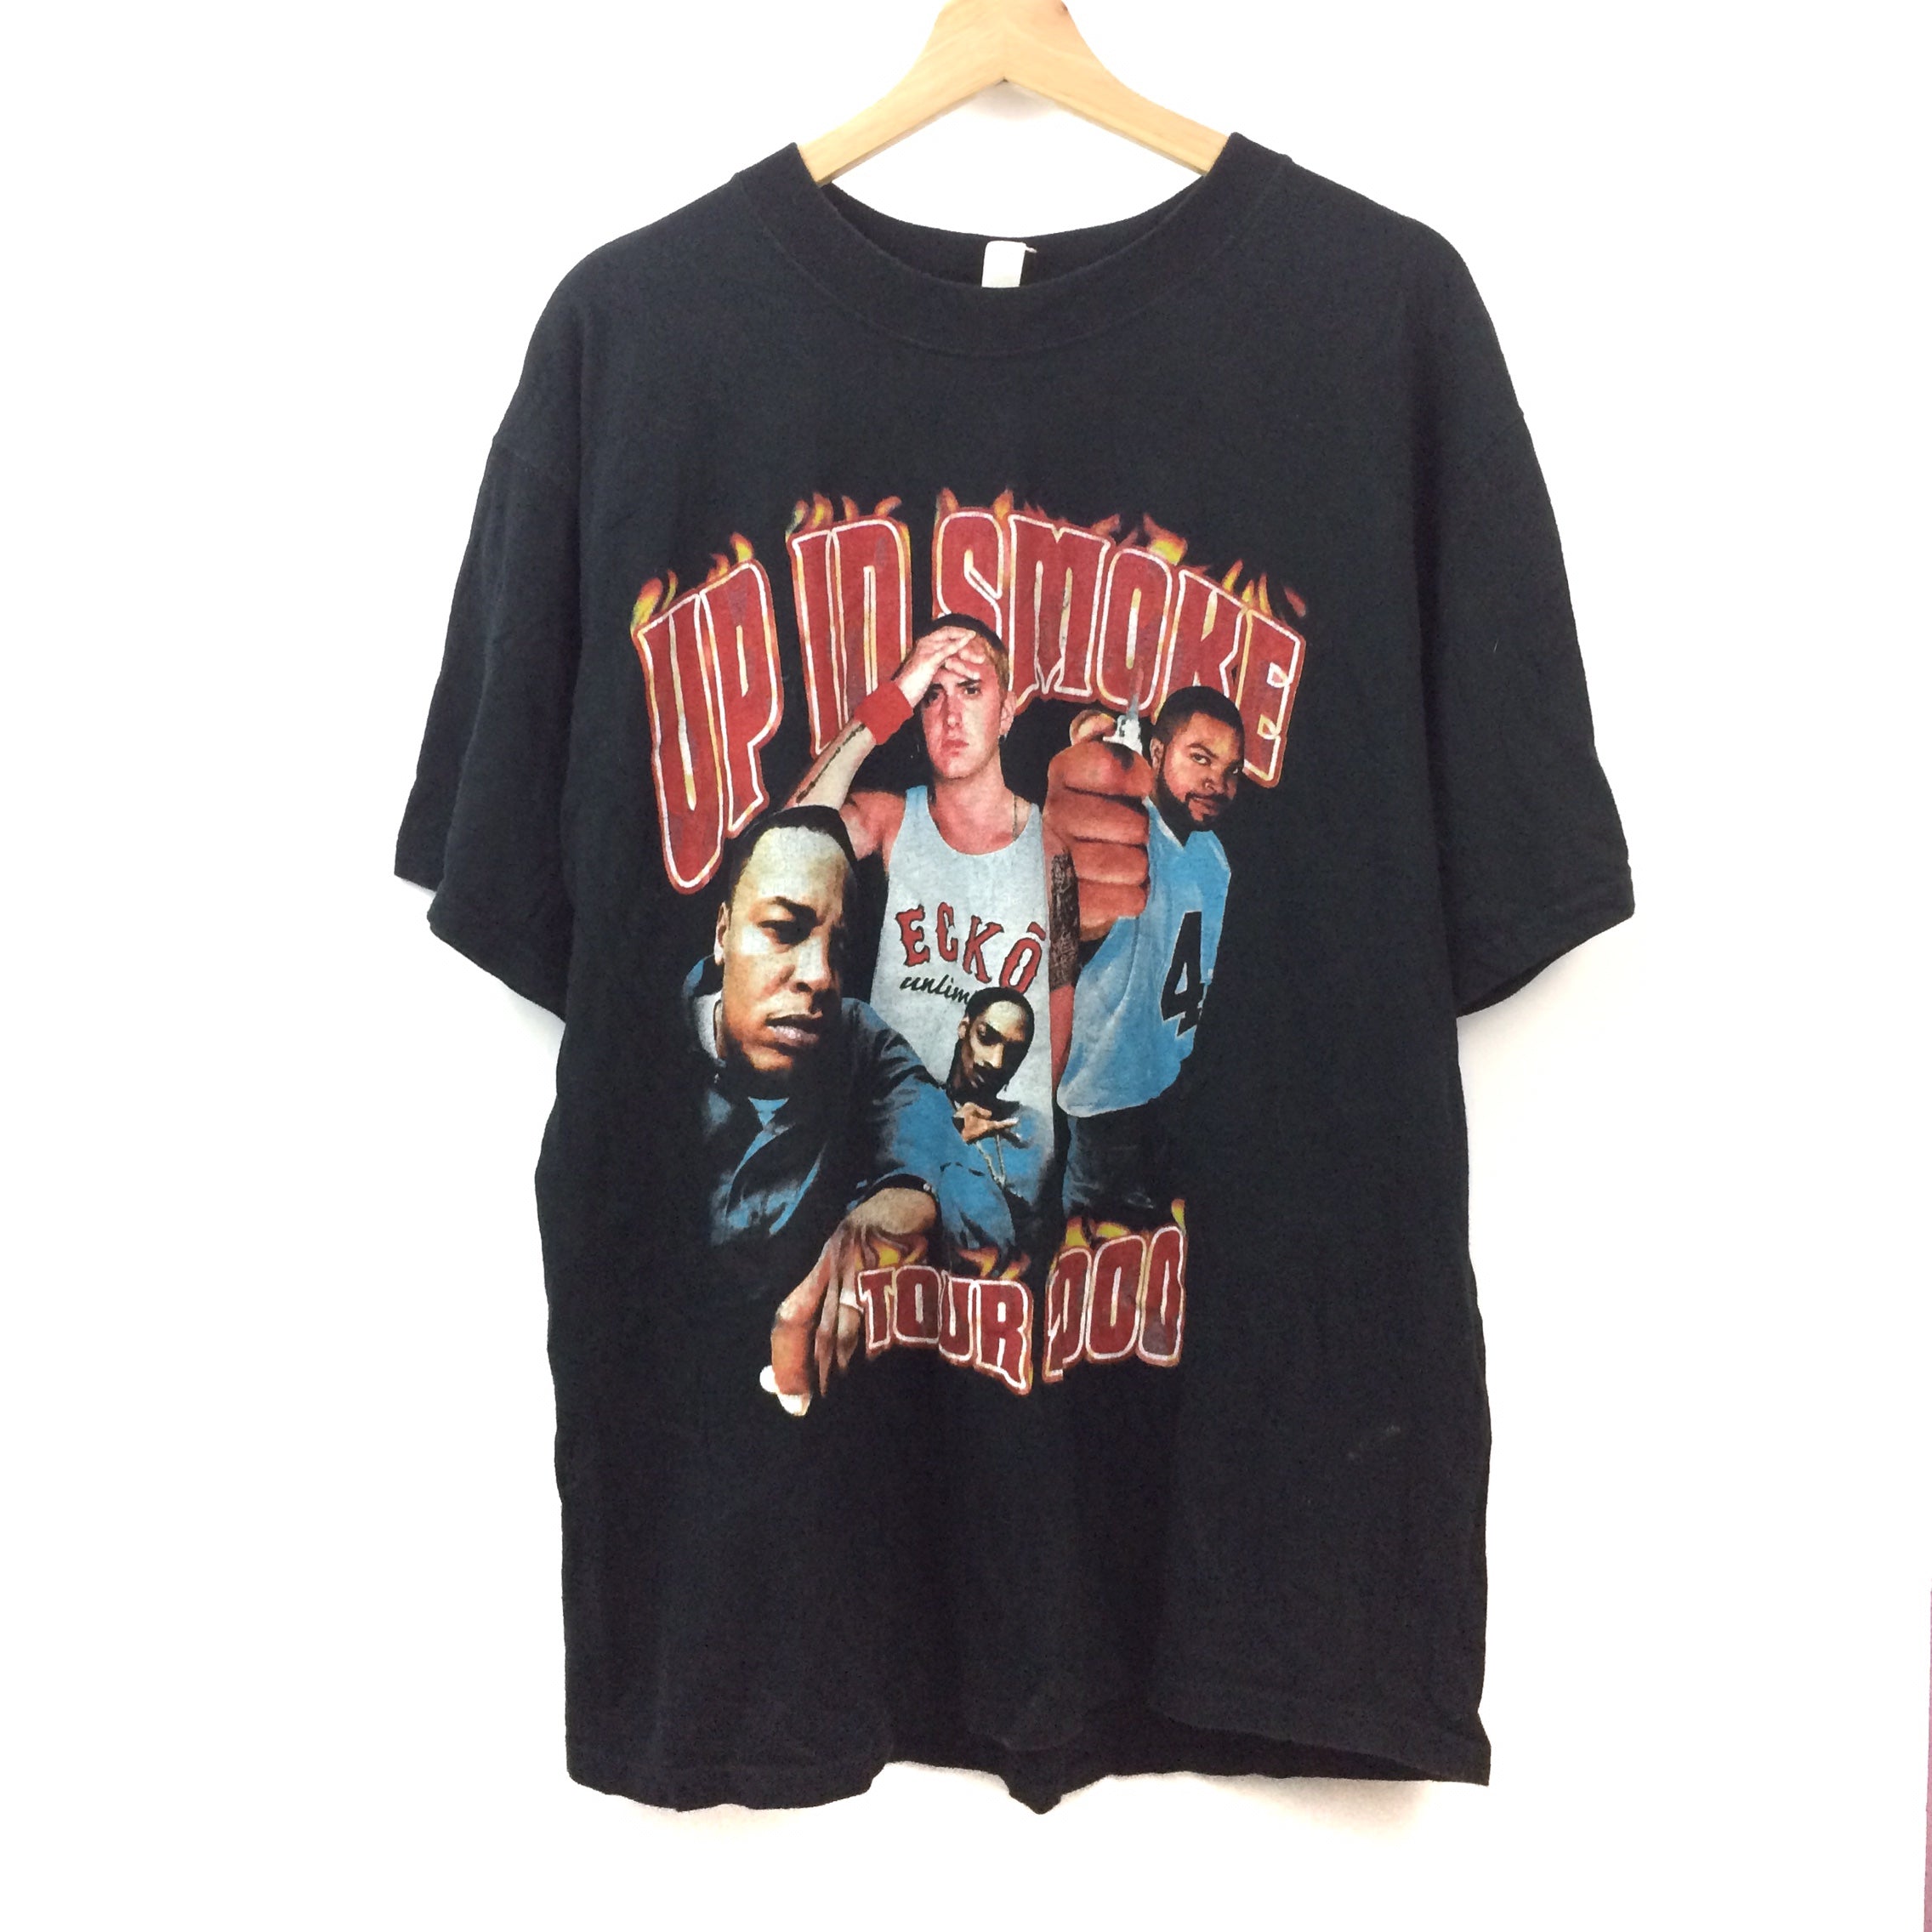 Up In Smoke Tour 2000 T-Shirt Black – Vintage Rap Wear